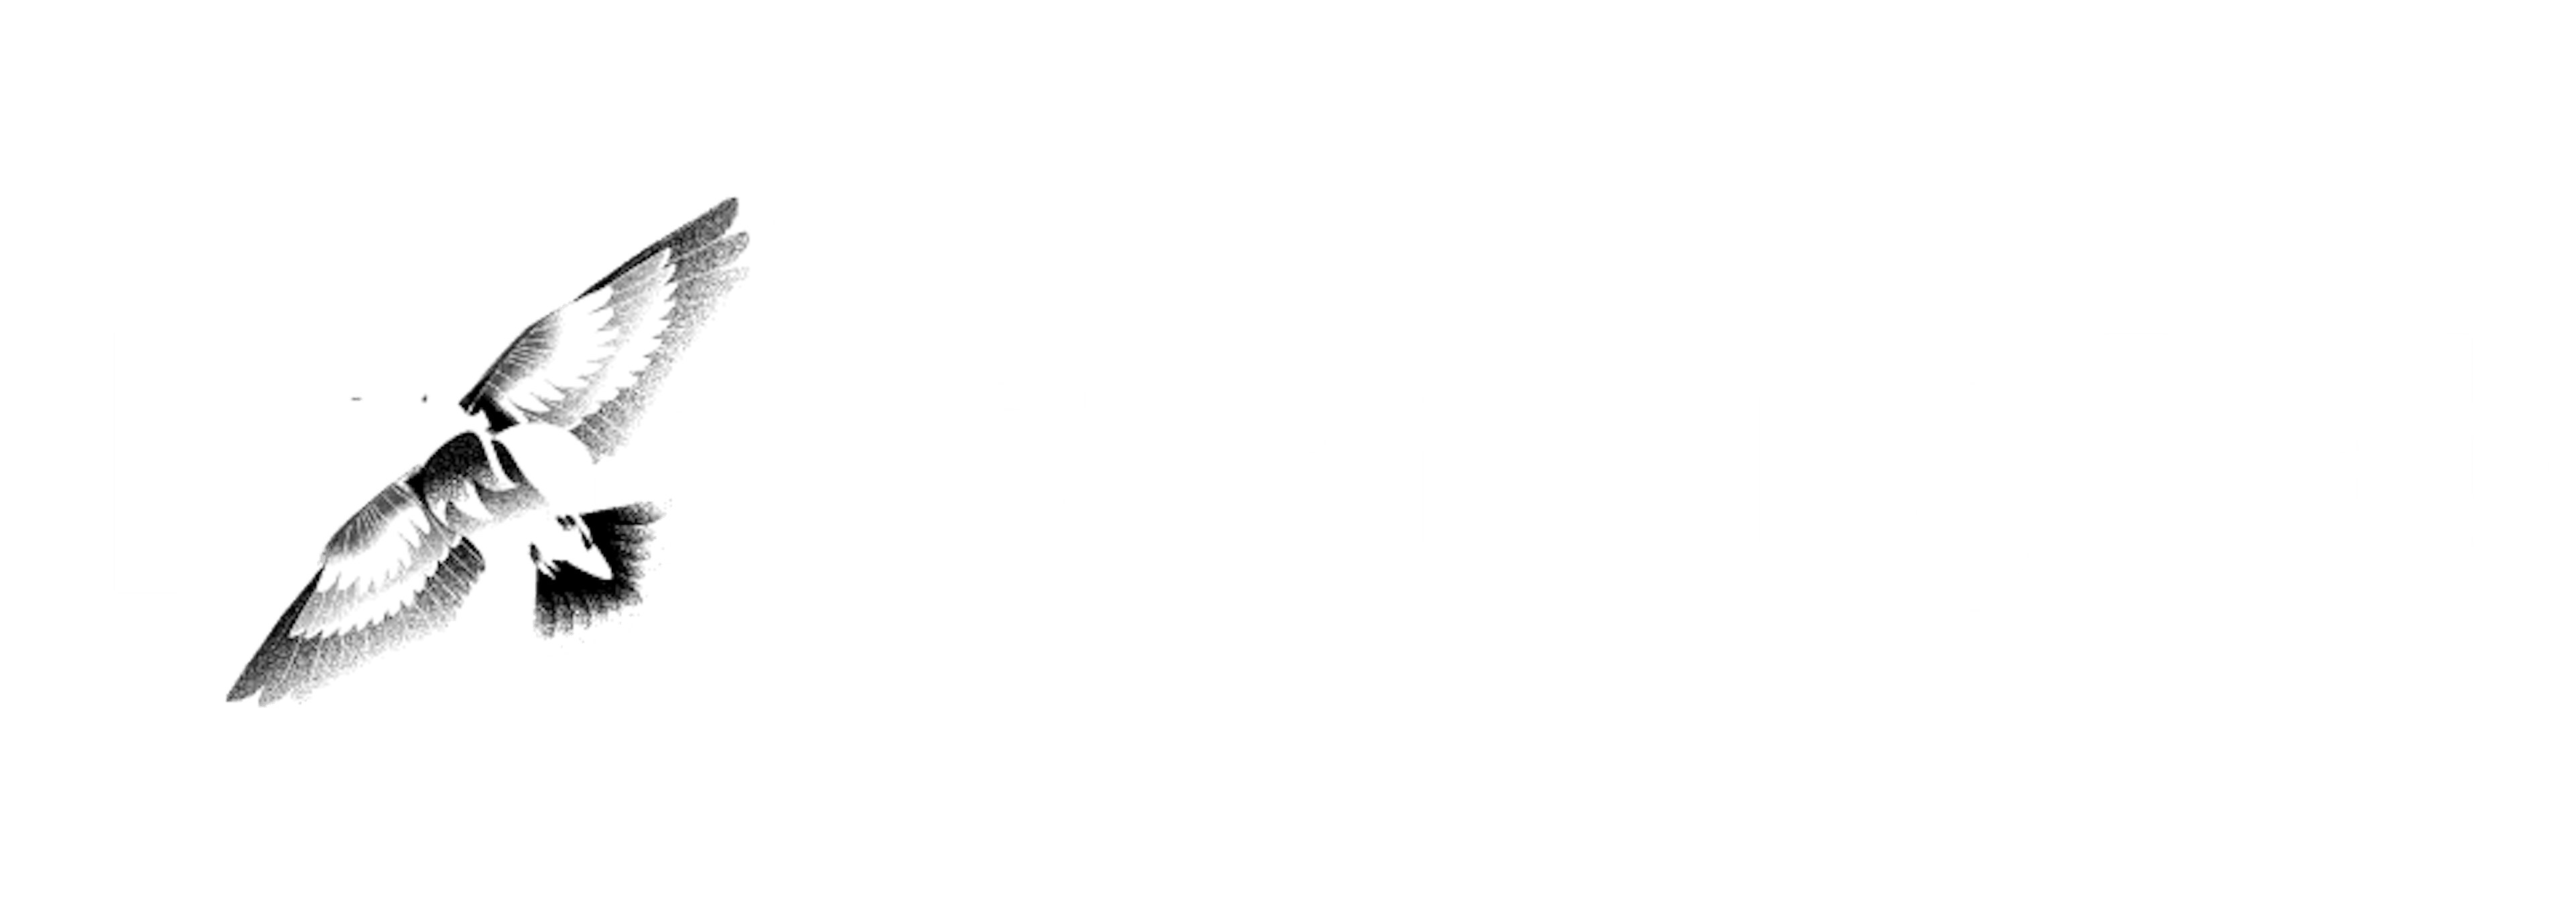 Starling Lab Logo